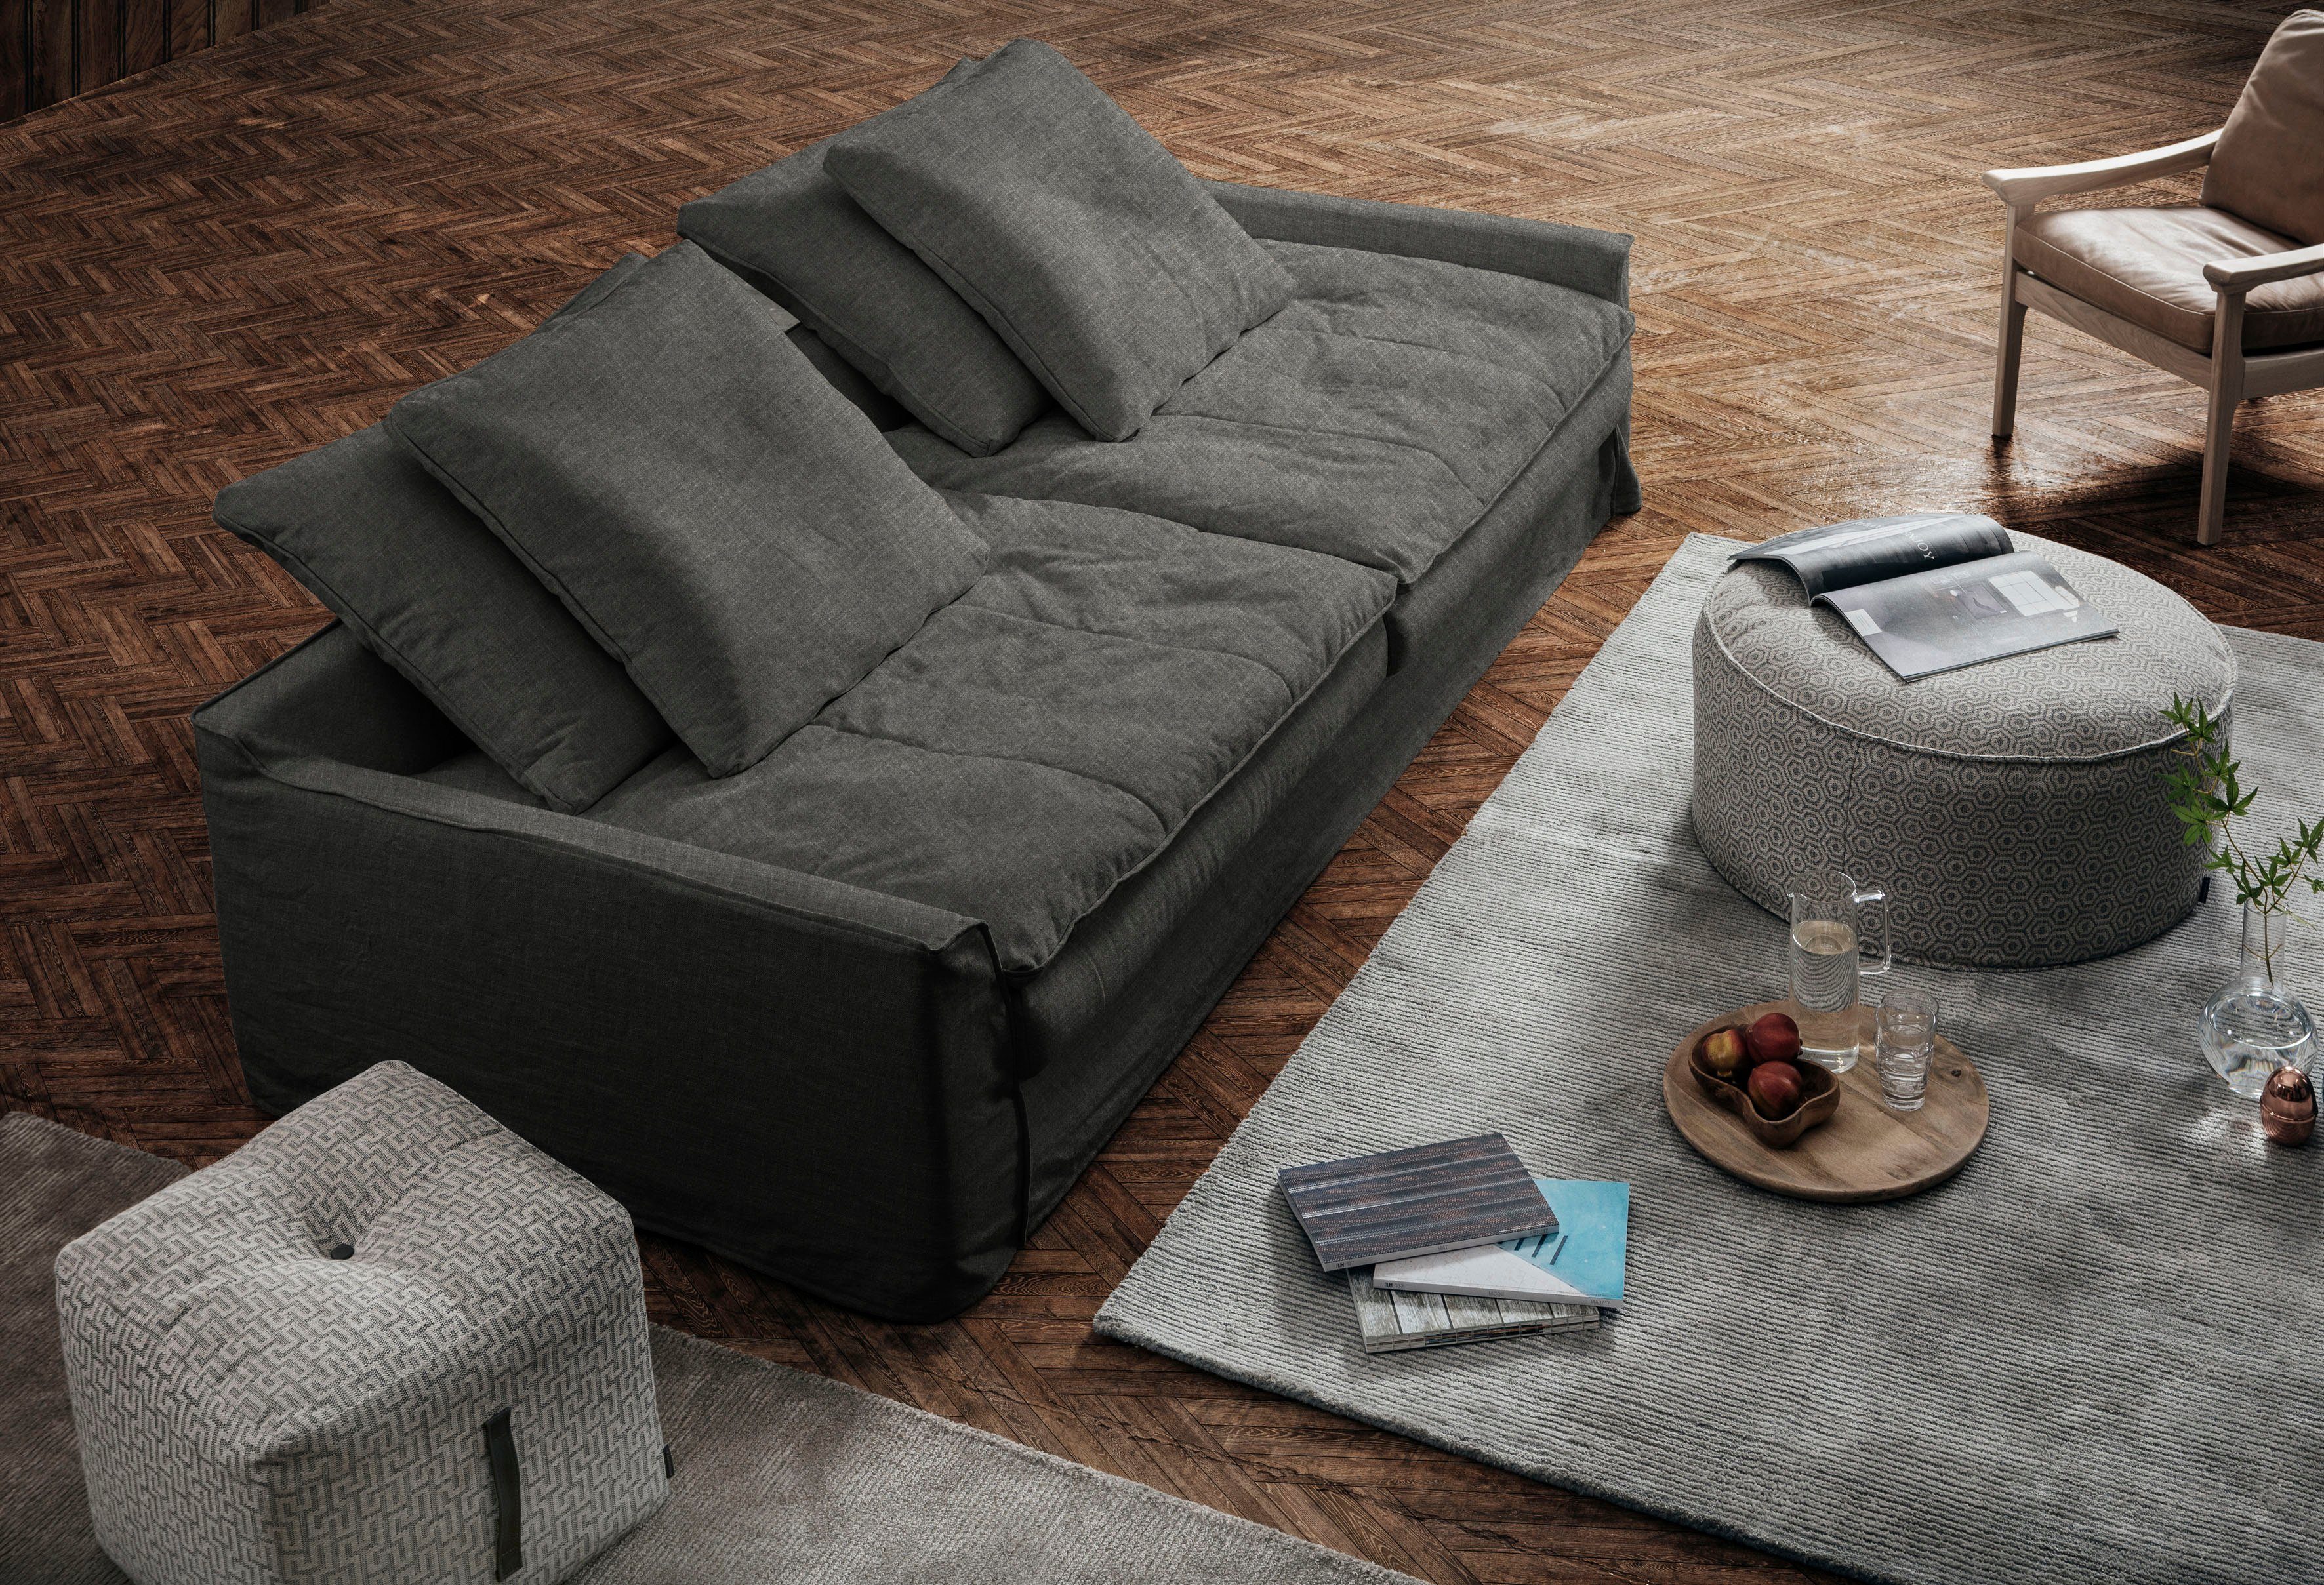 Big-Sofa und Sake, inklusive Hussenbezug abnehmbarer furninova 4 Kissen, waschbarer